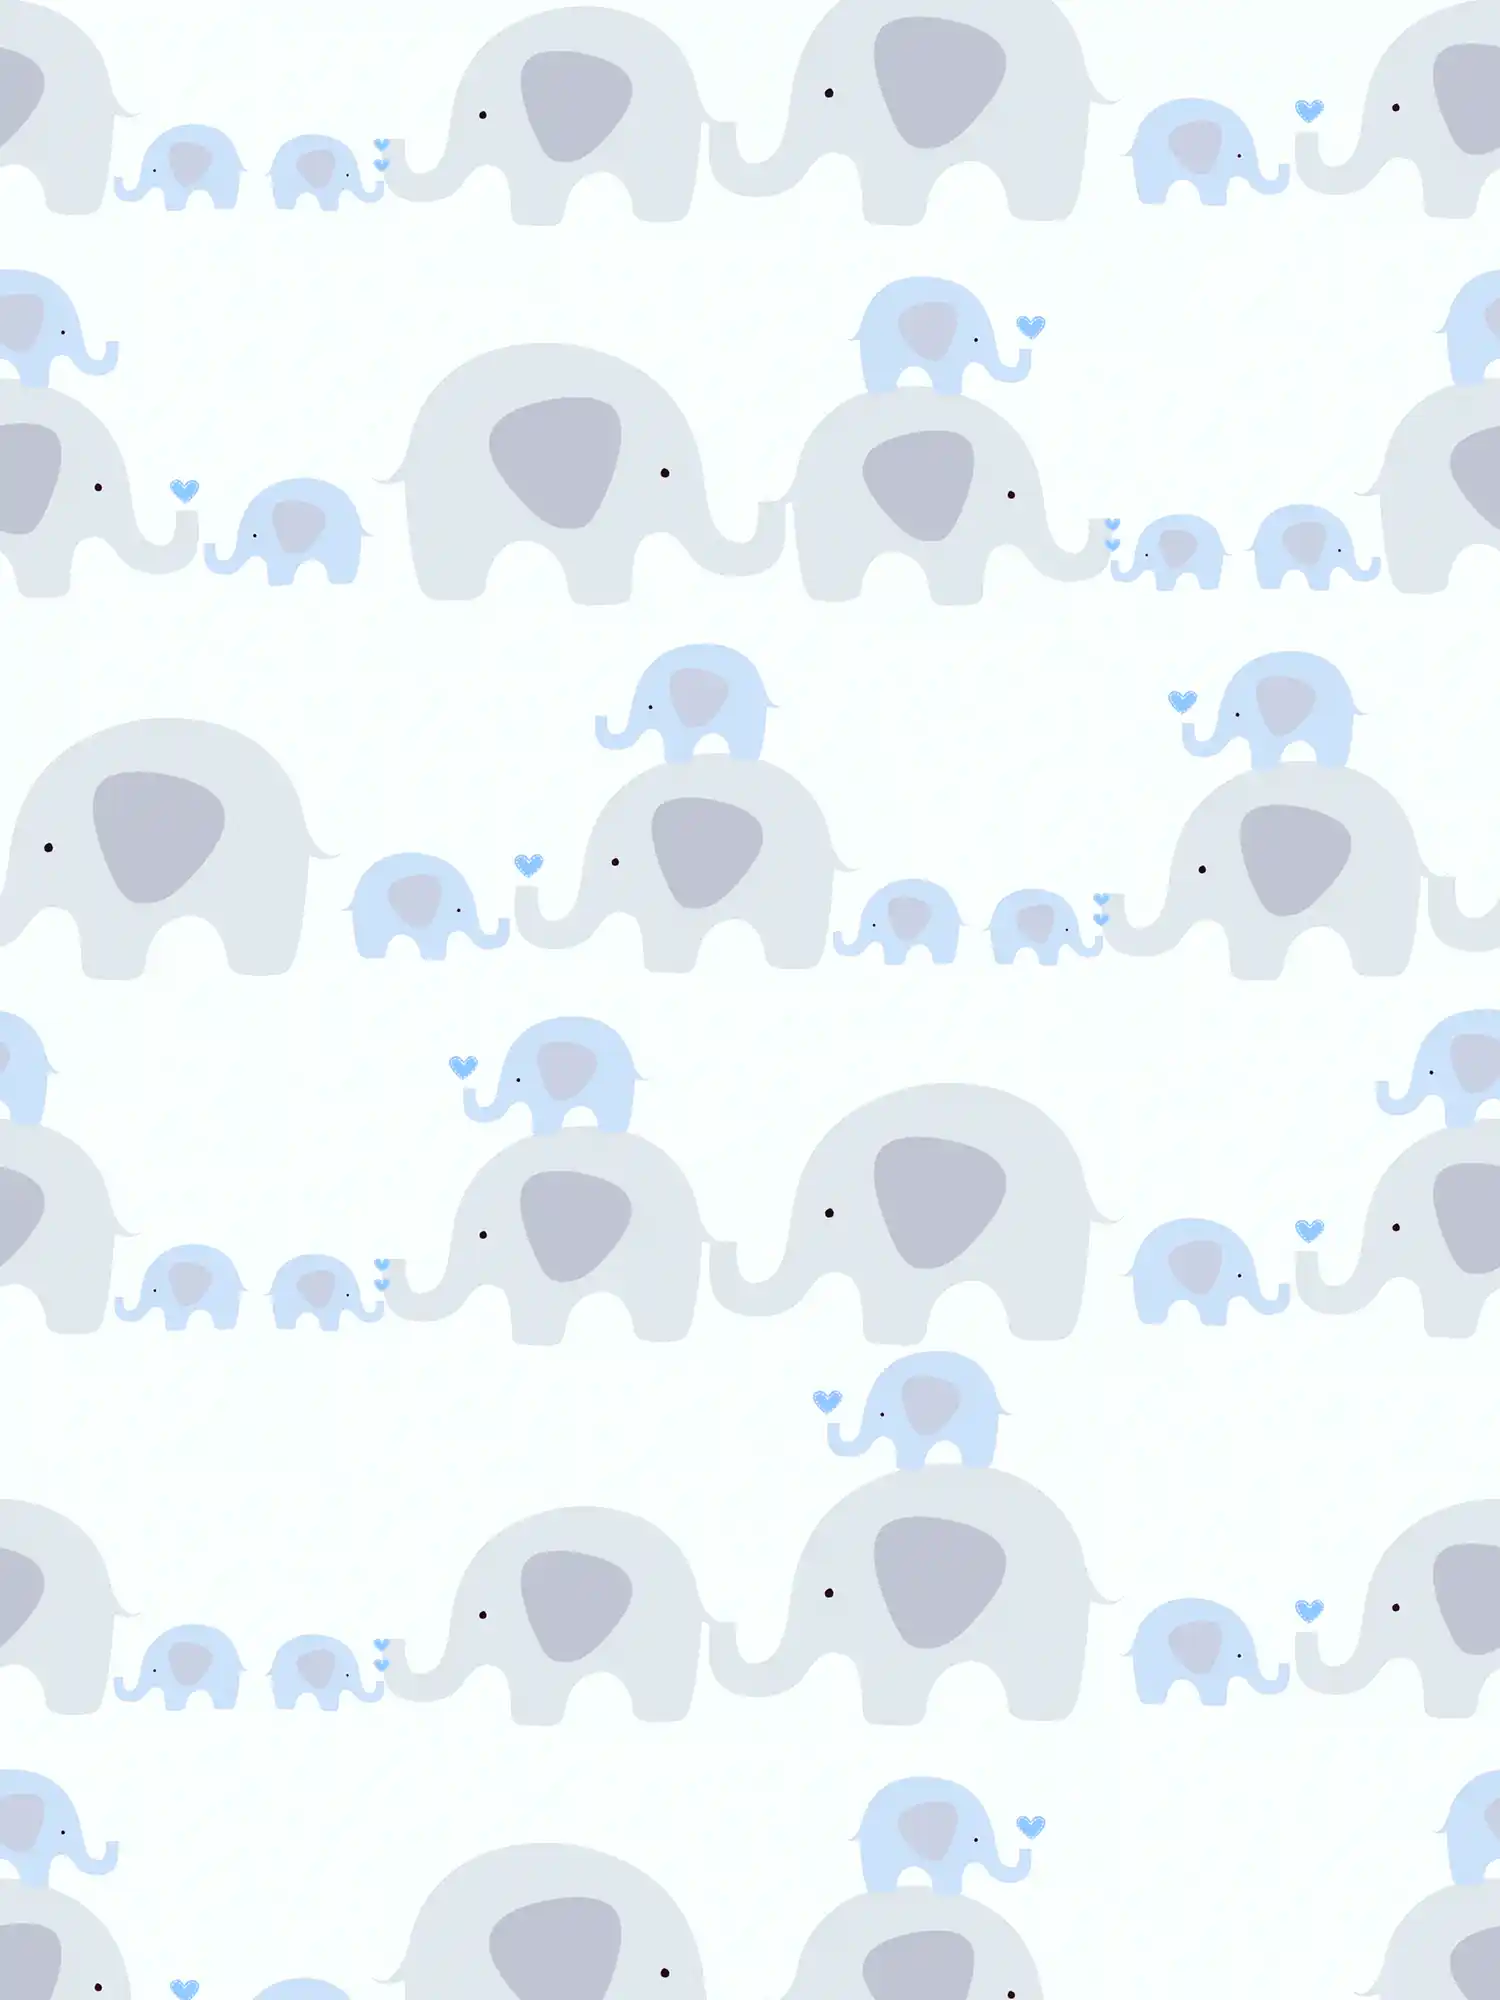 Papier peint enfant garçon éléphant - bleu, gris, blanc
